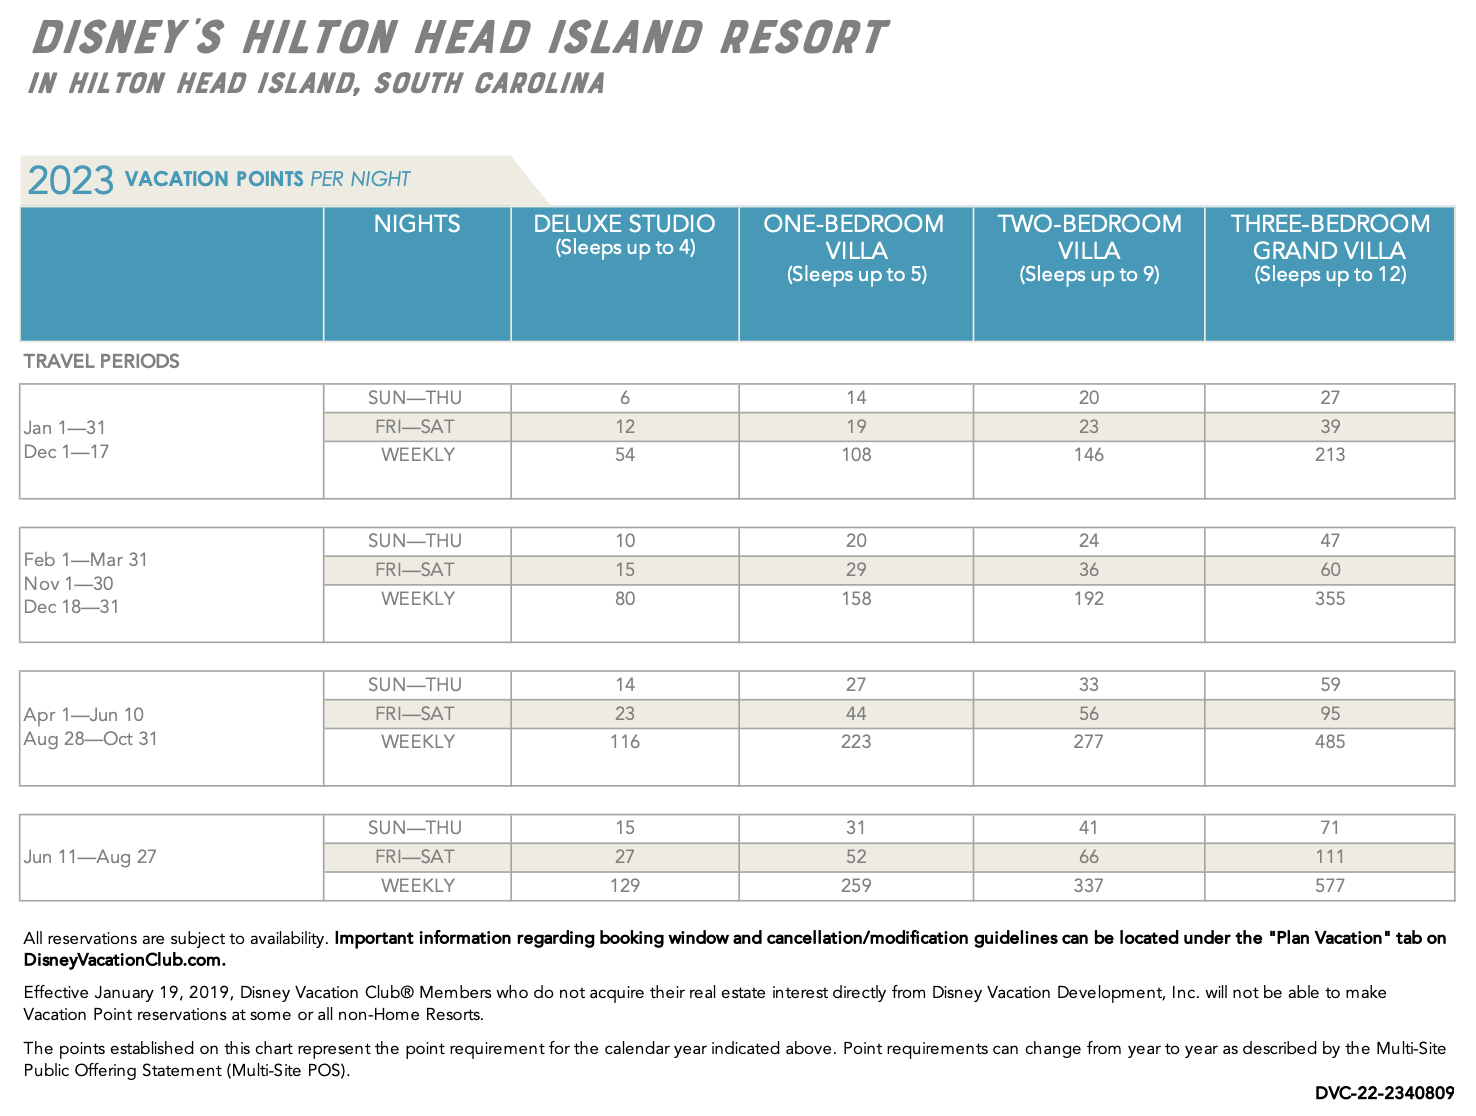 Hilton Head Island 2023